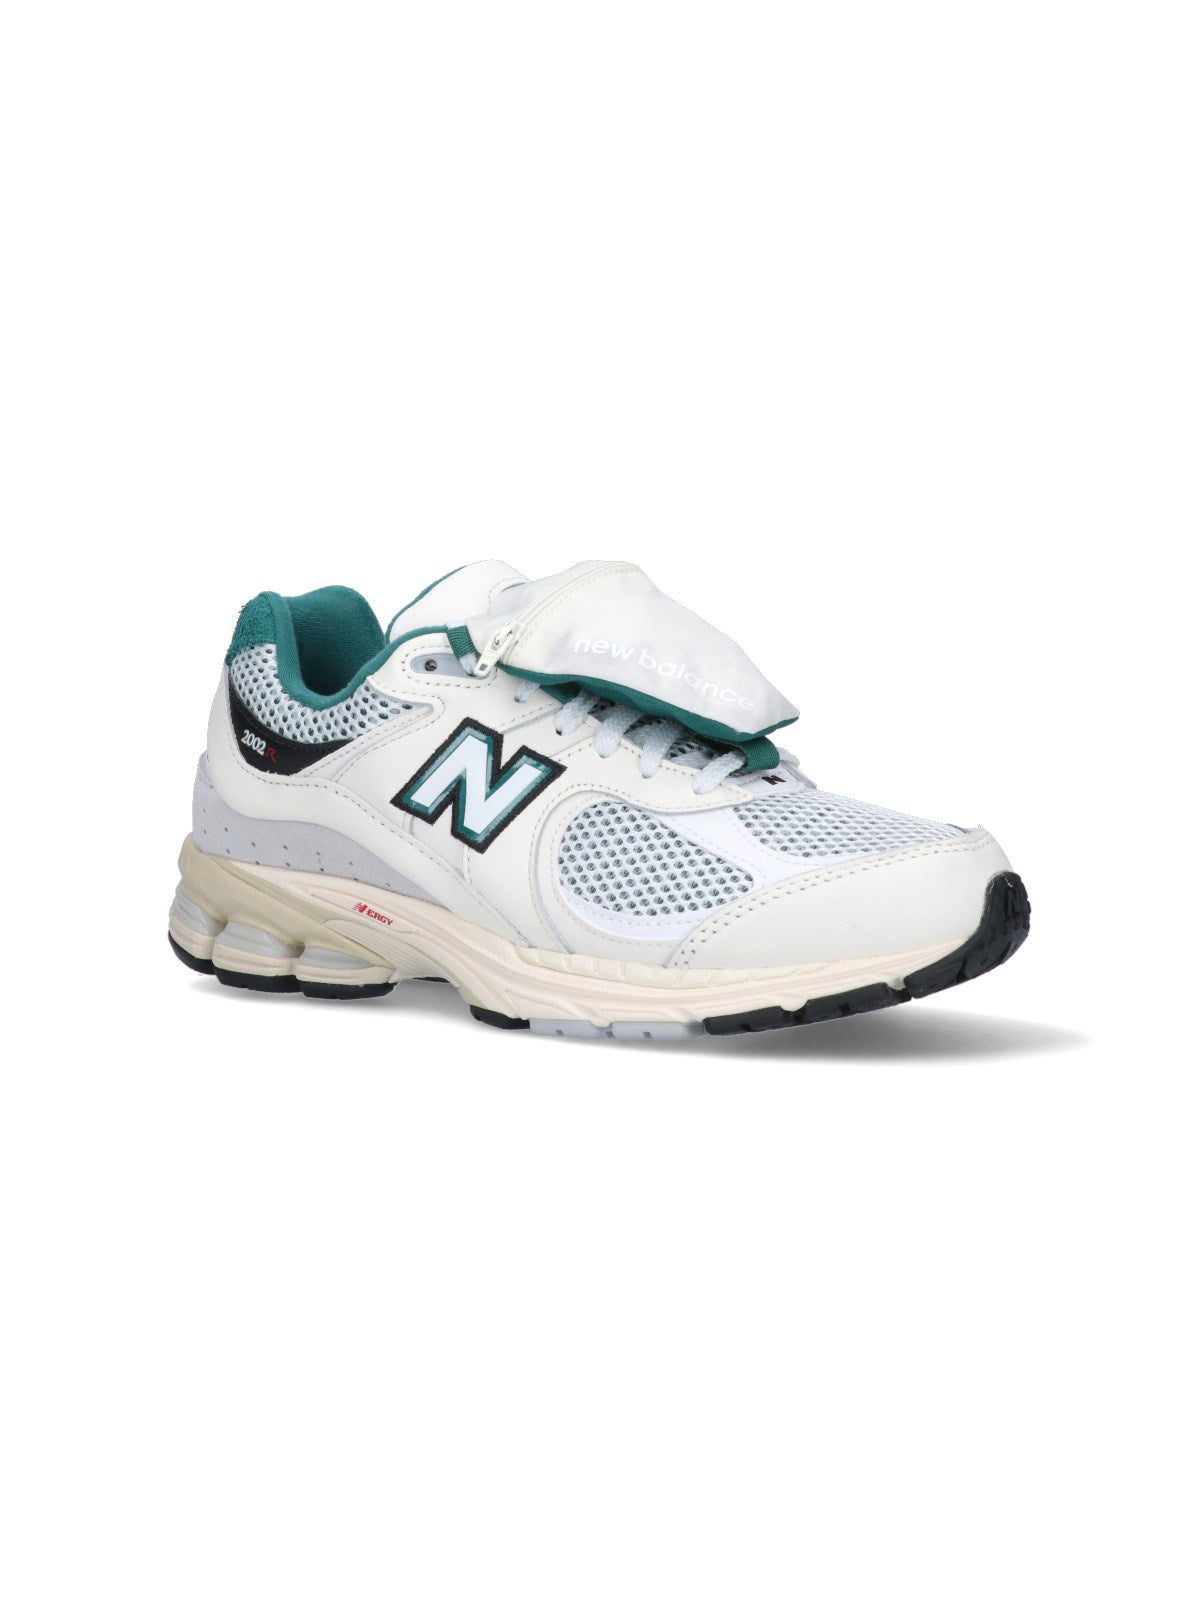 new balance sneakers "2002r nightwatch green”